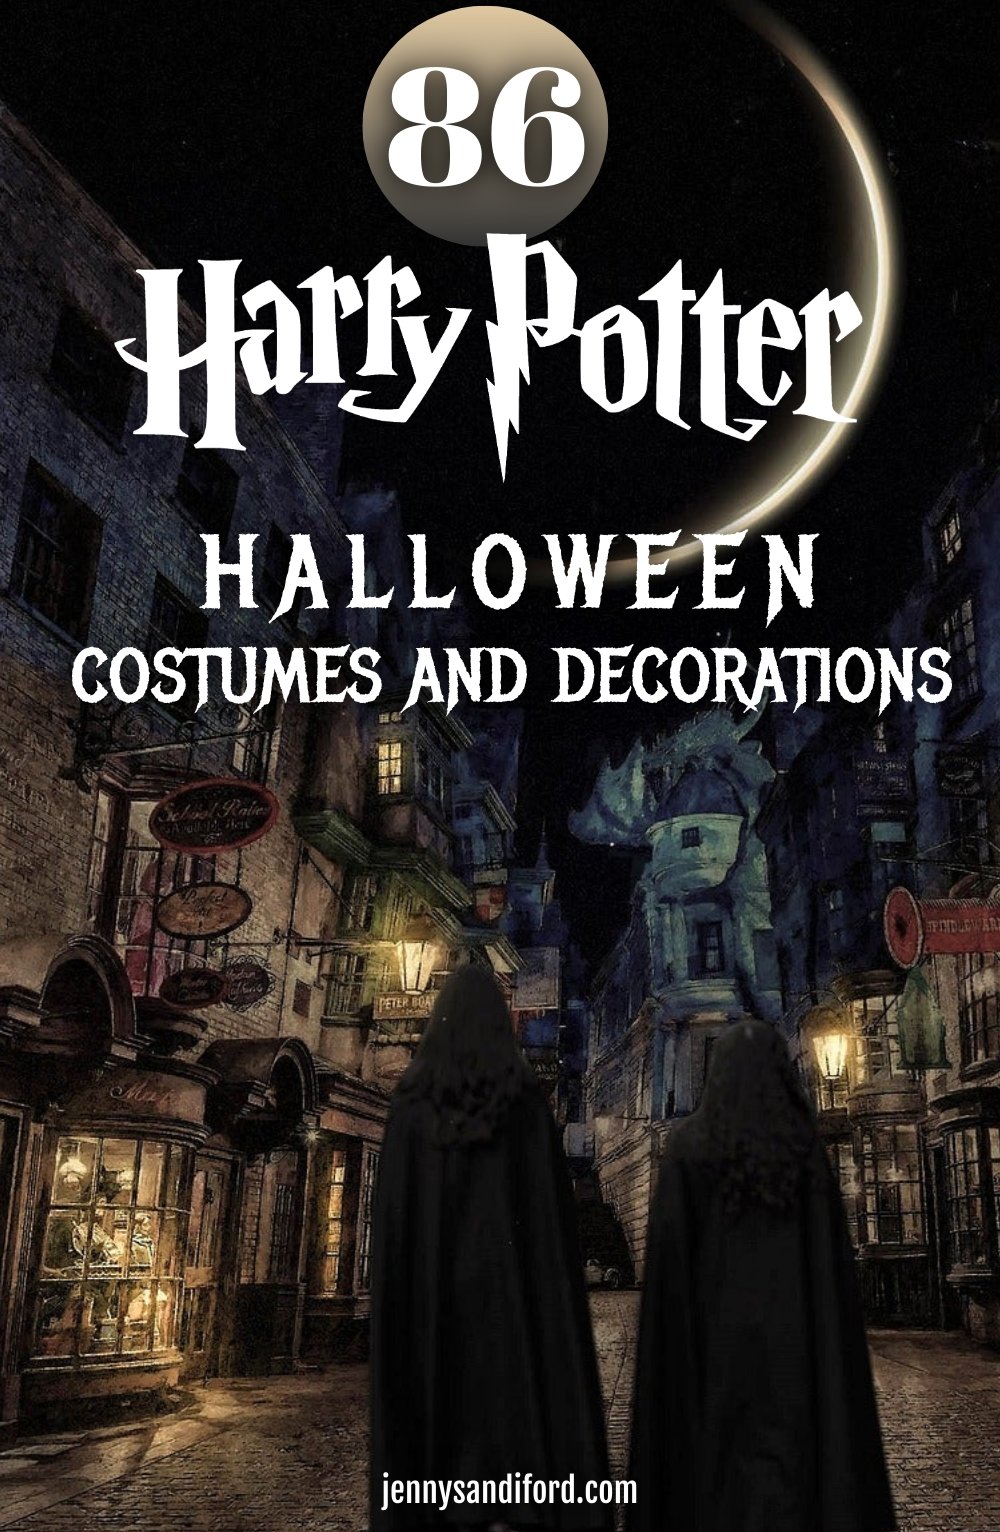 Ravenclaw DIY Halloween costume Hogwarts uniform from Harry Potter